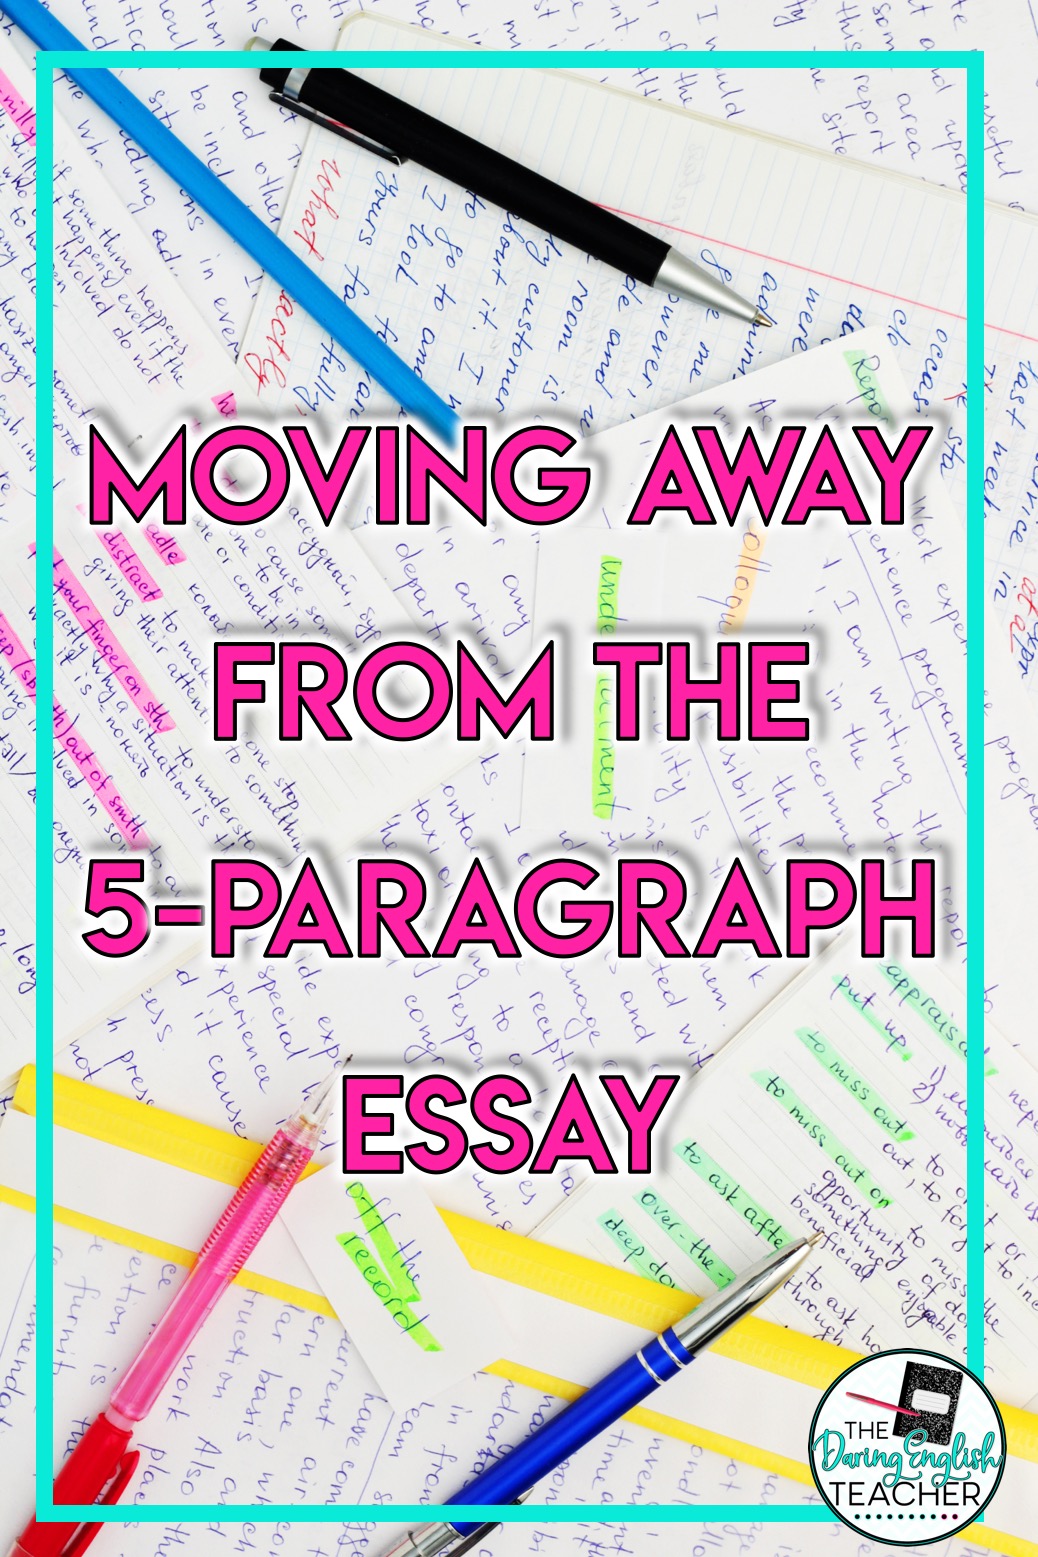 Should we still teach the five-paragraph essay?